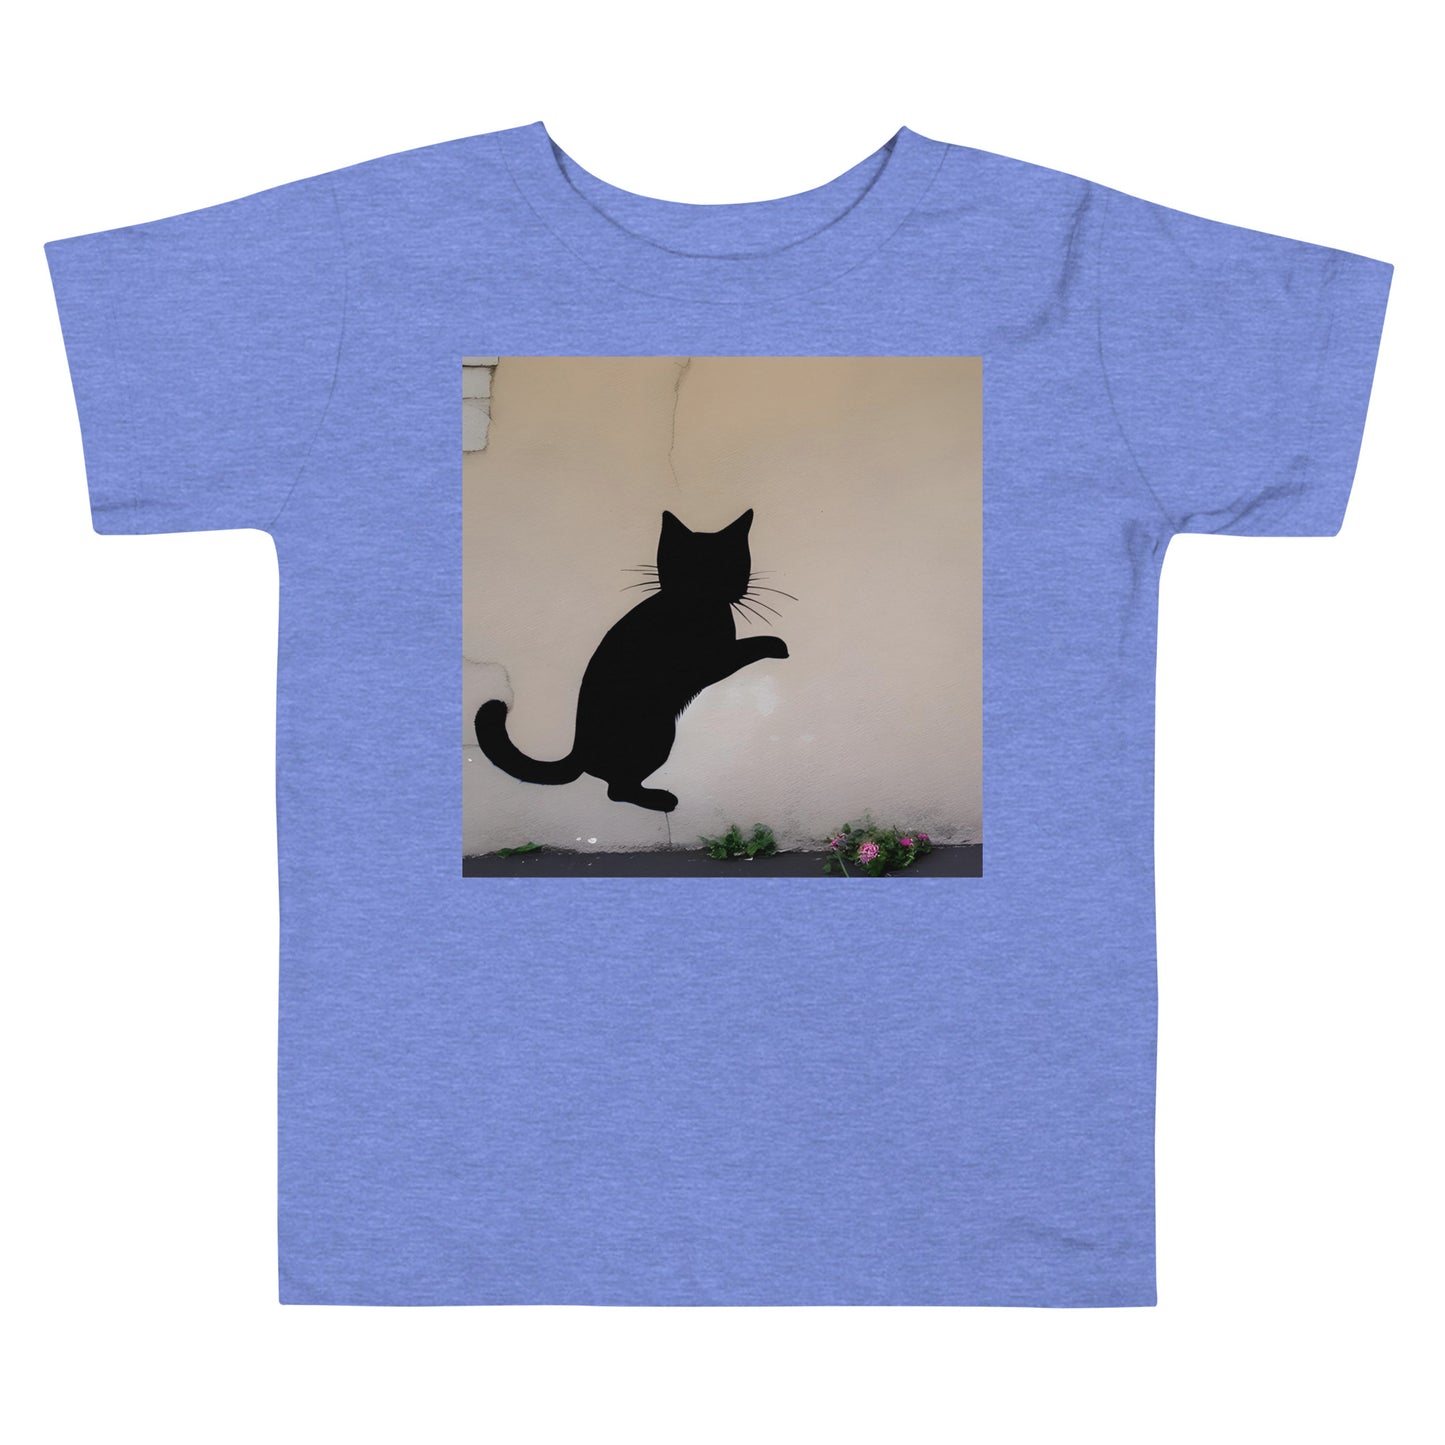 Purradise Toddler's T-Shirt - 039